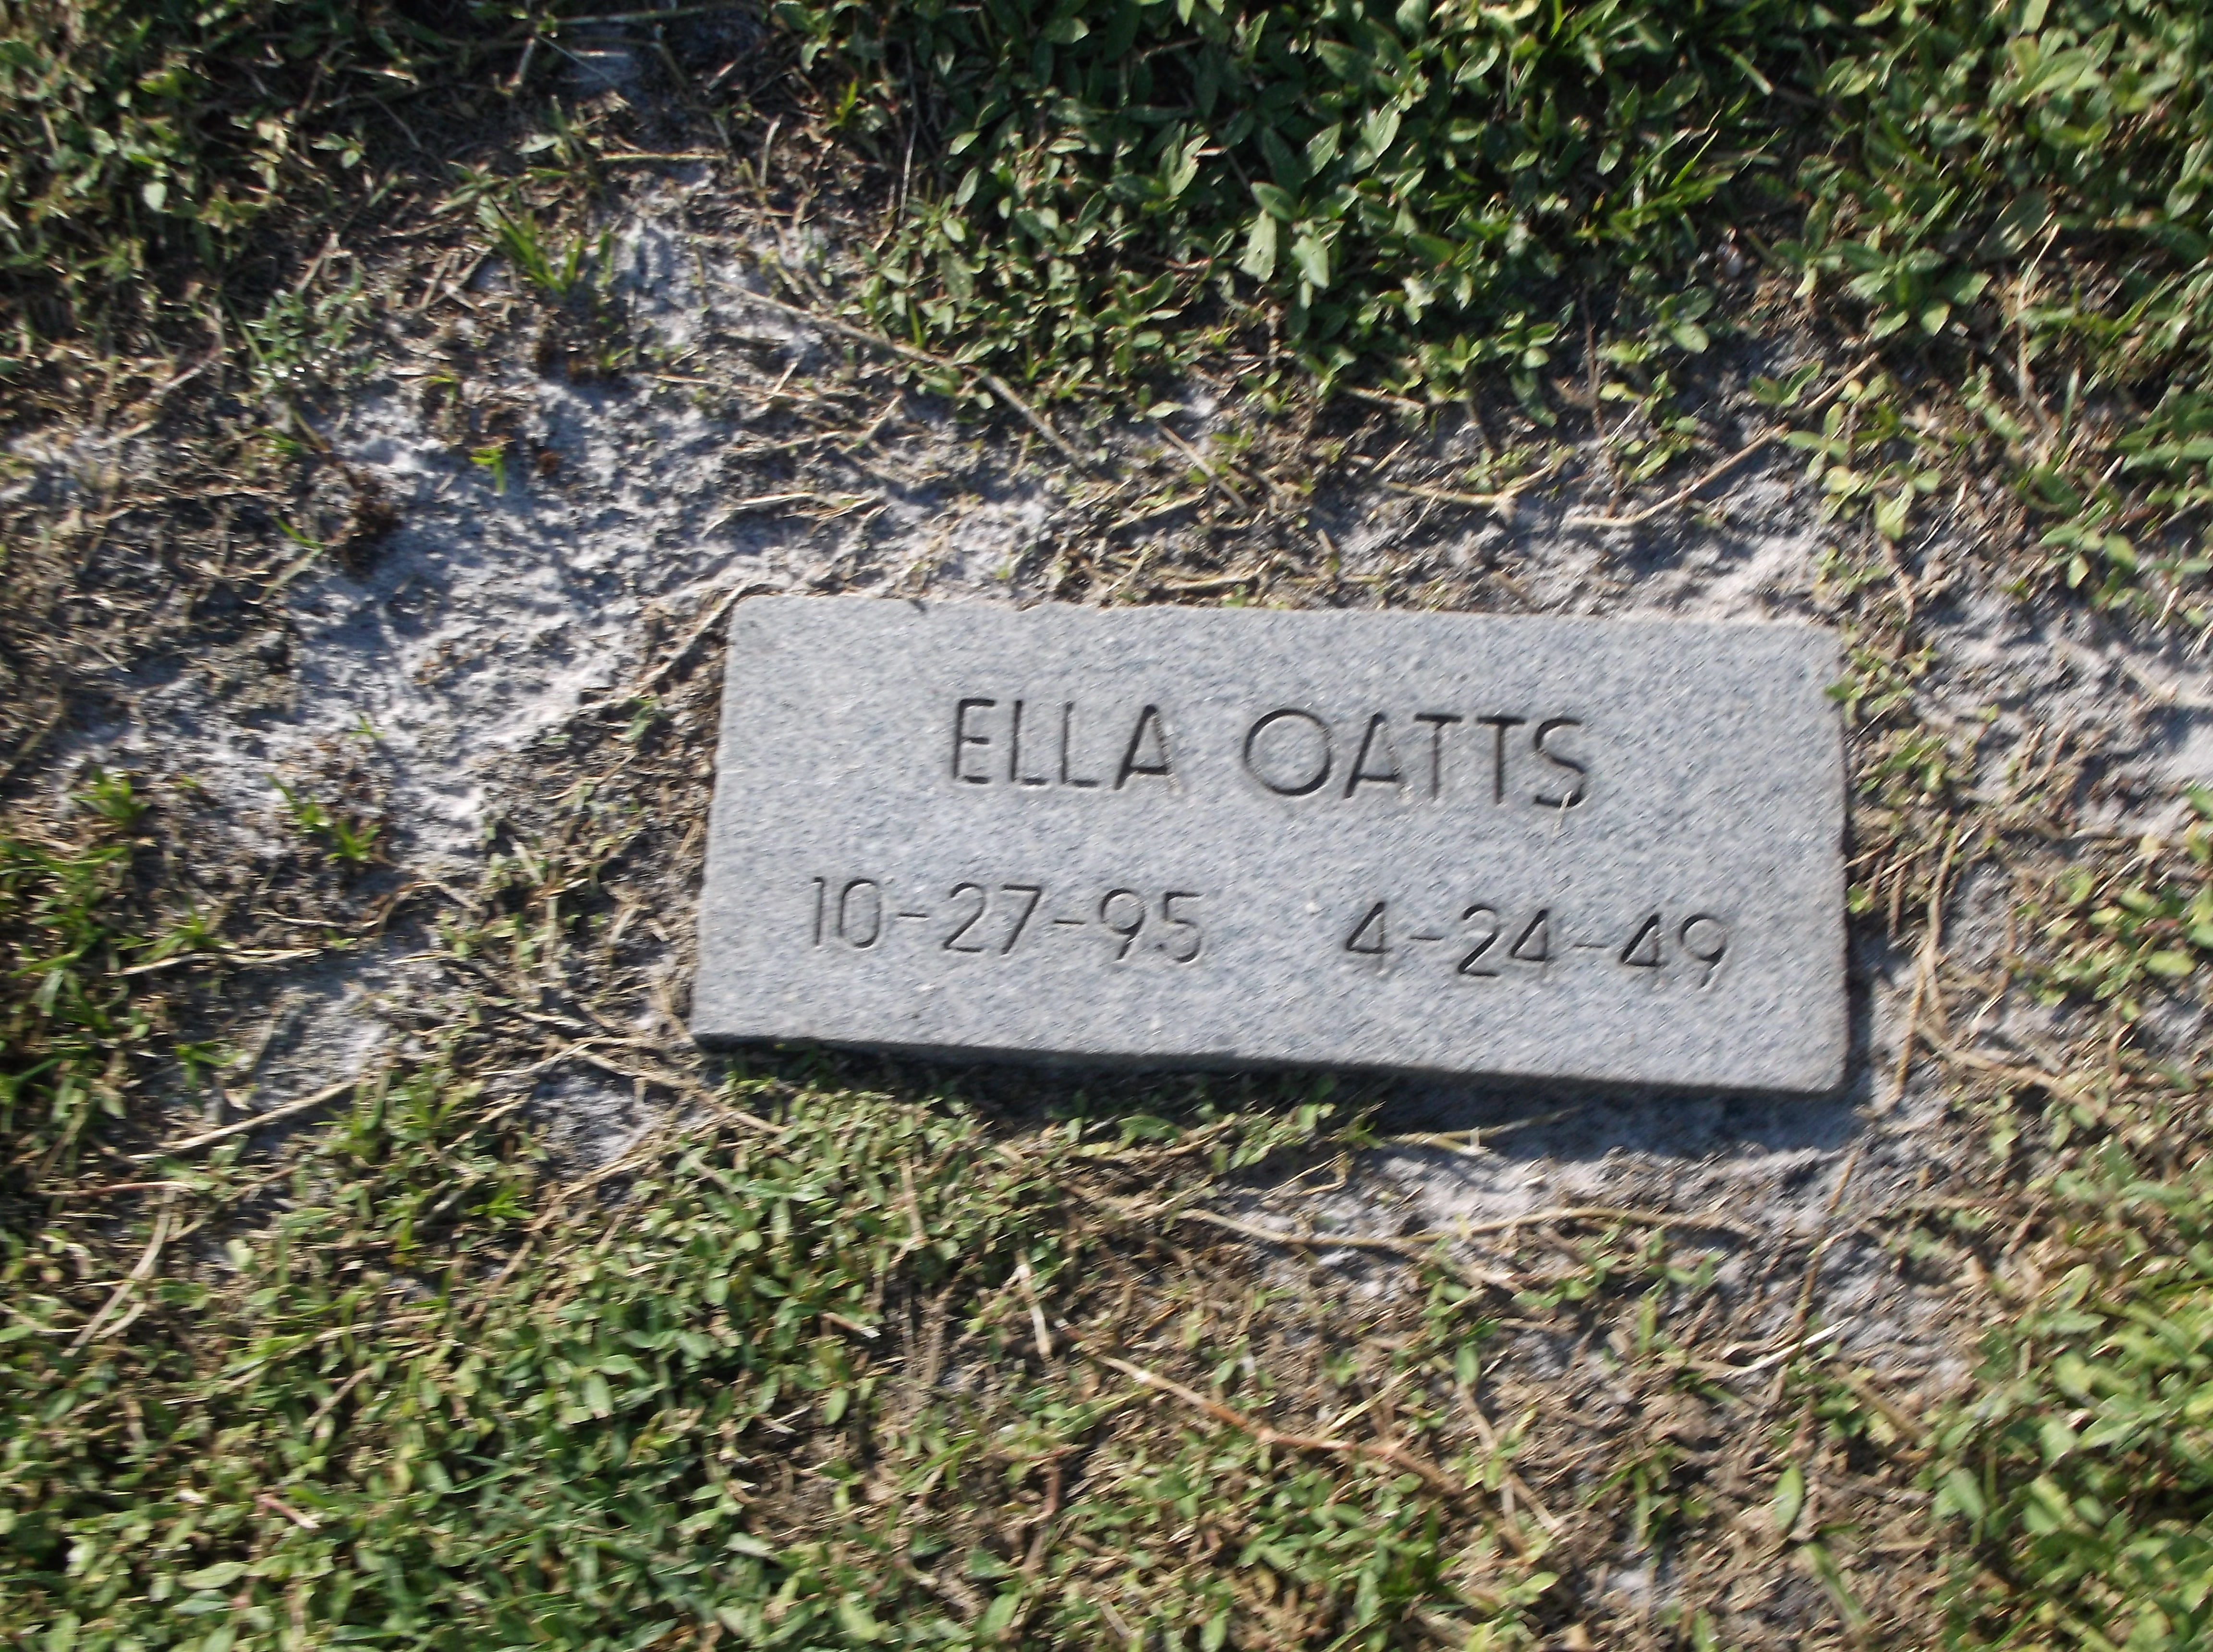 Ella Oatts